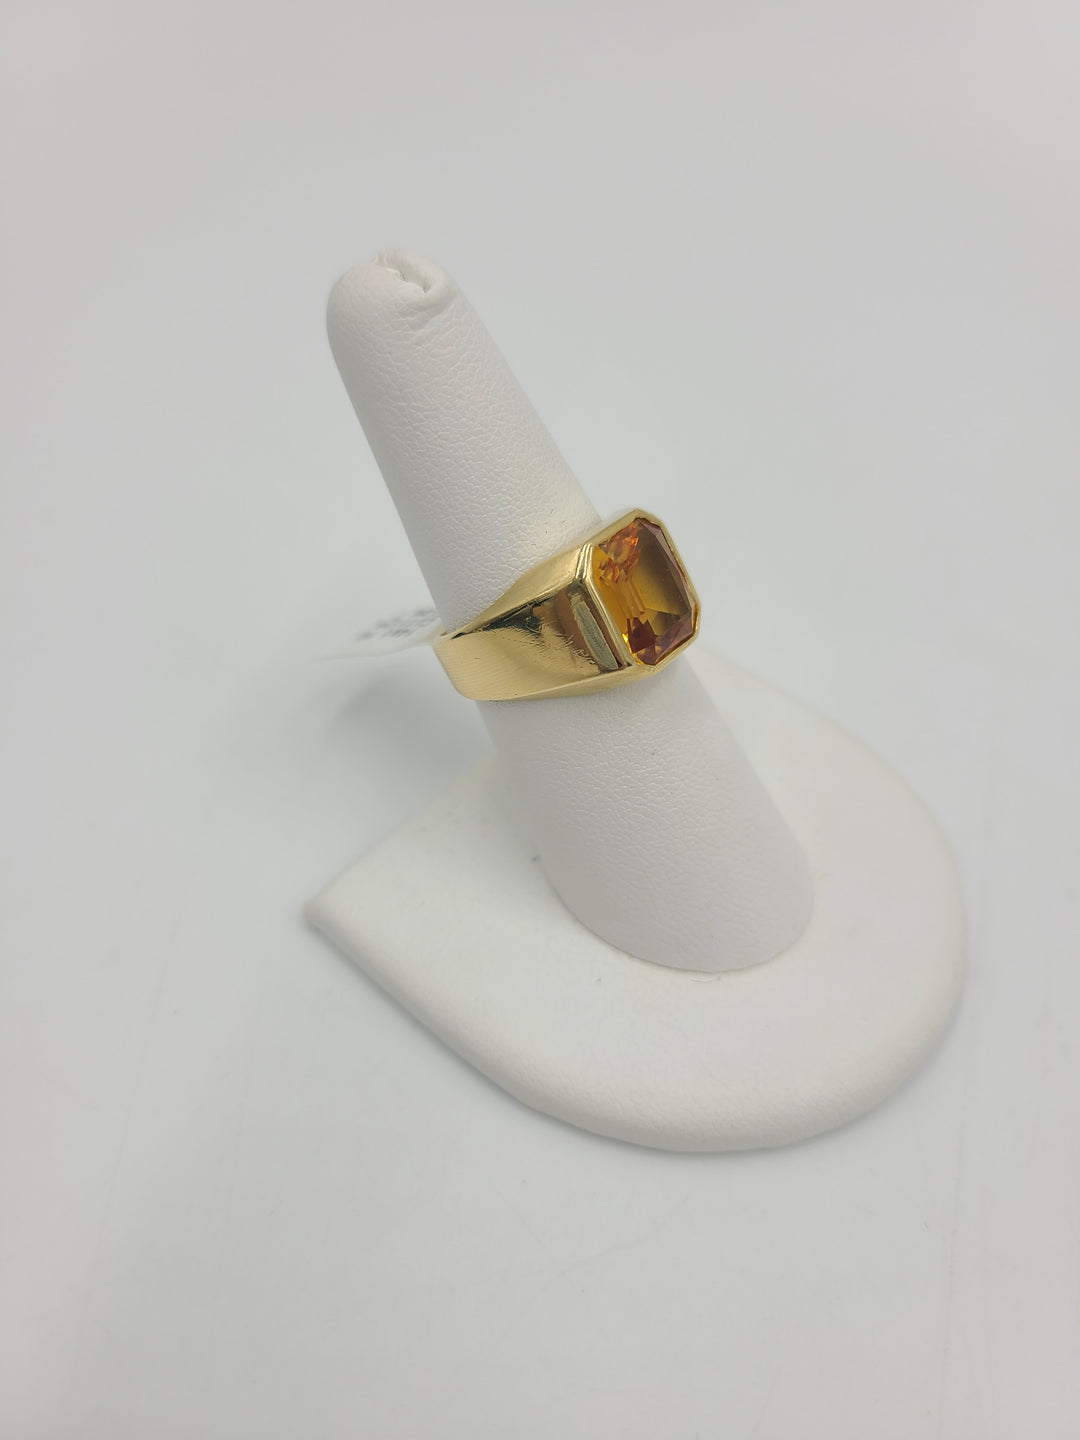 k795 Stylish Men's 14kt Yellow Gold Citrine Ring